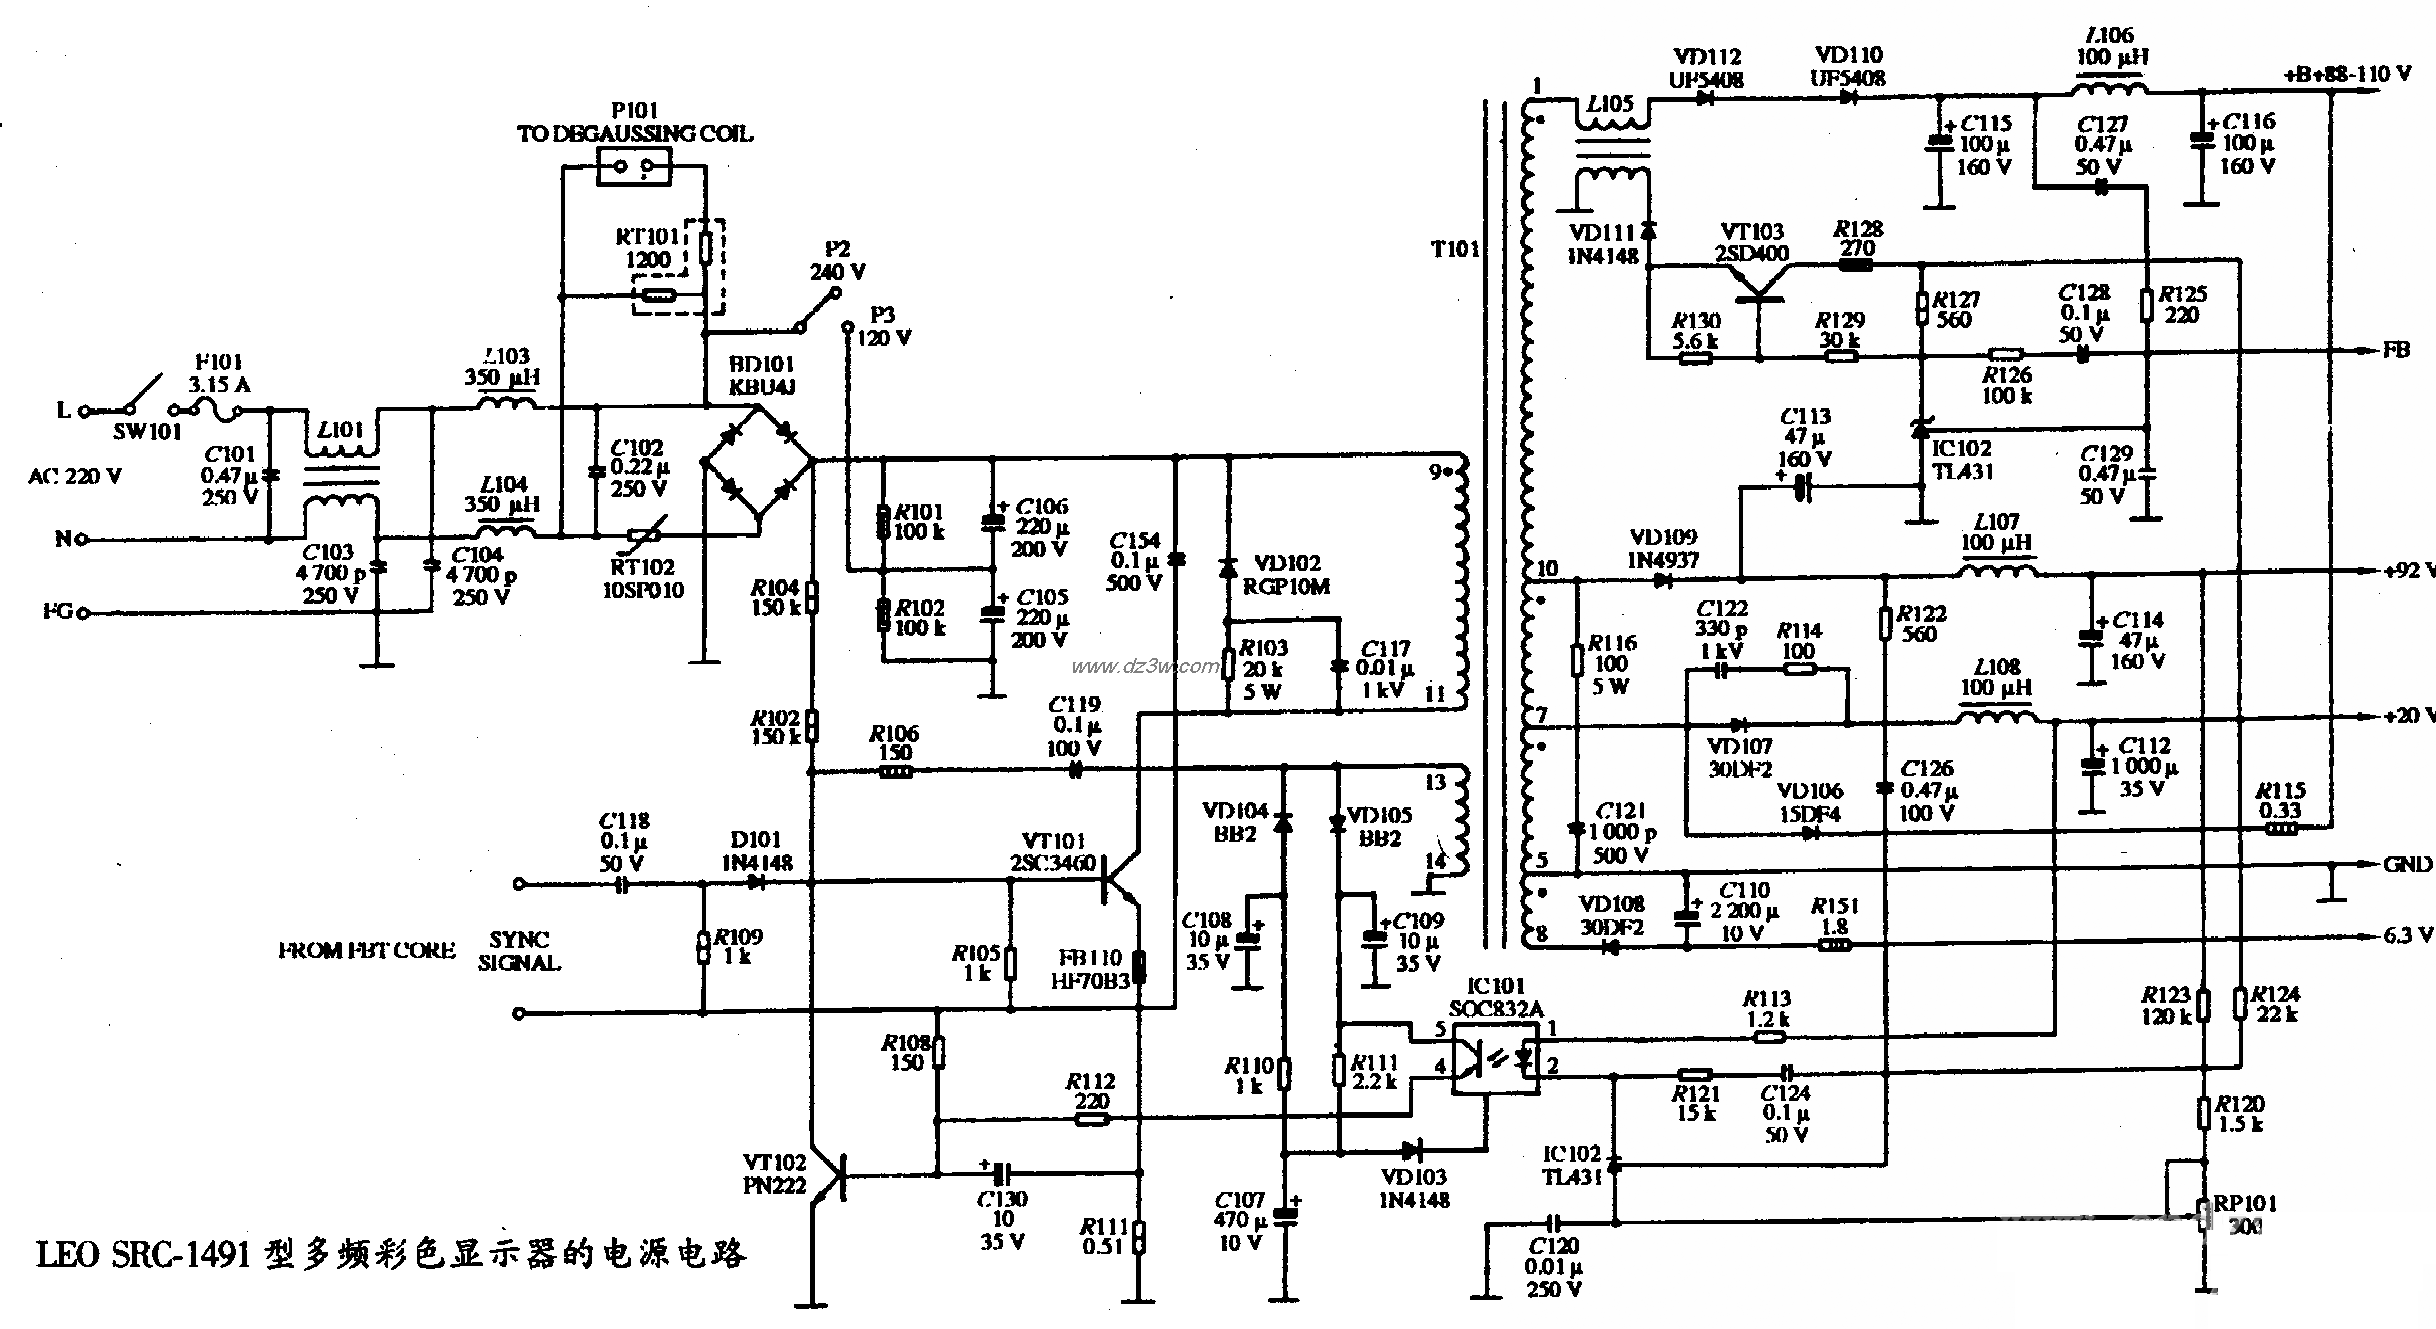 LEO SRC-1491型多頻彩色顯示器的電源電路圖